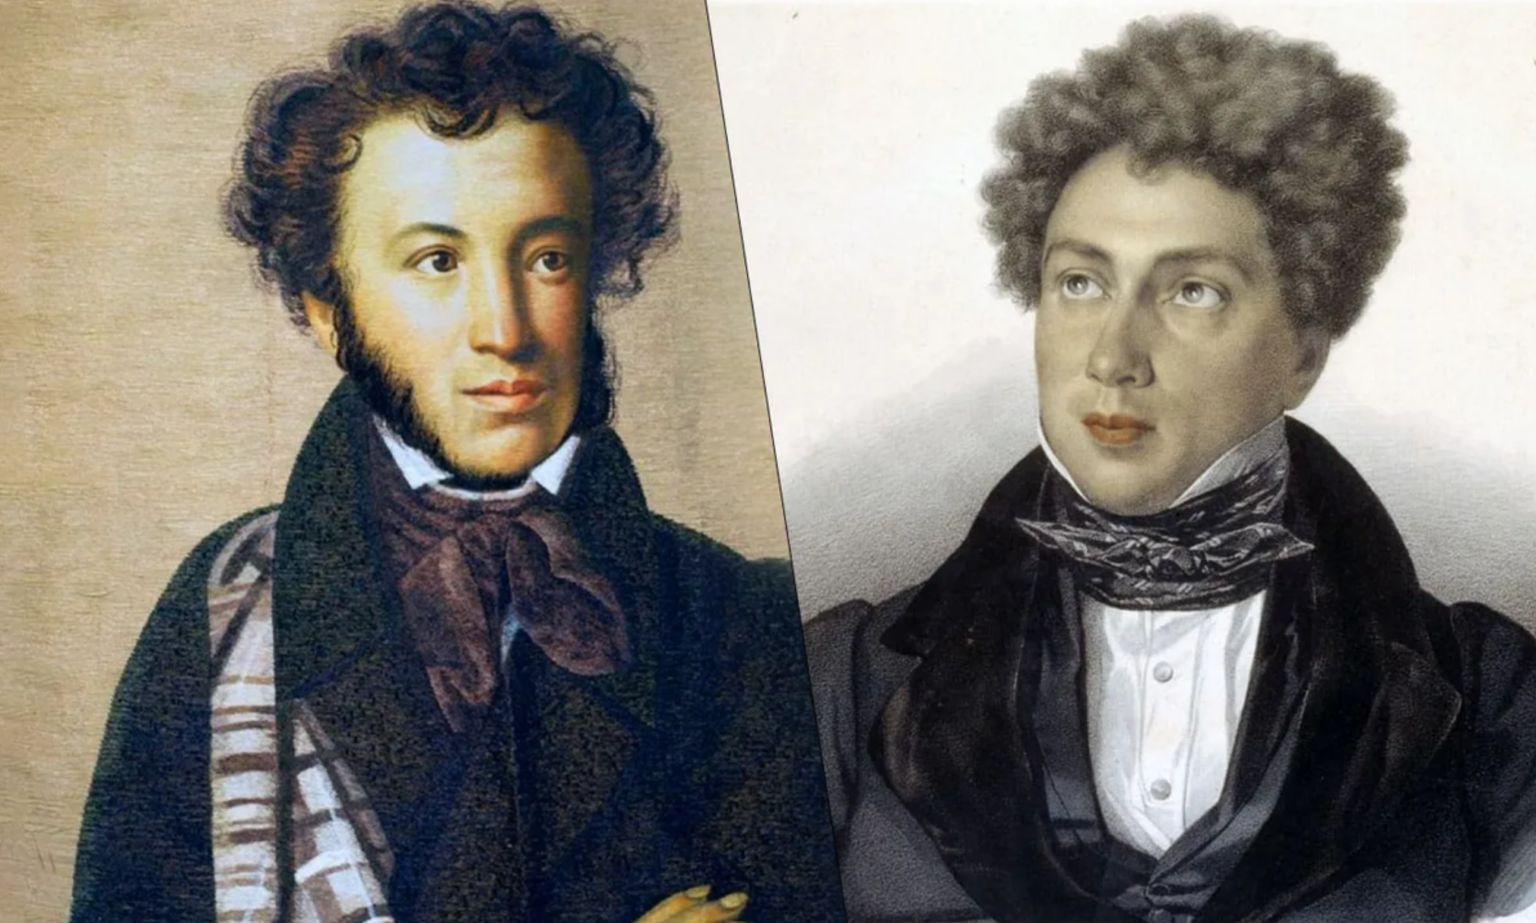 Сравнение пушкина и дюма. Дюма и Пушкин.